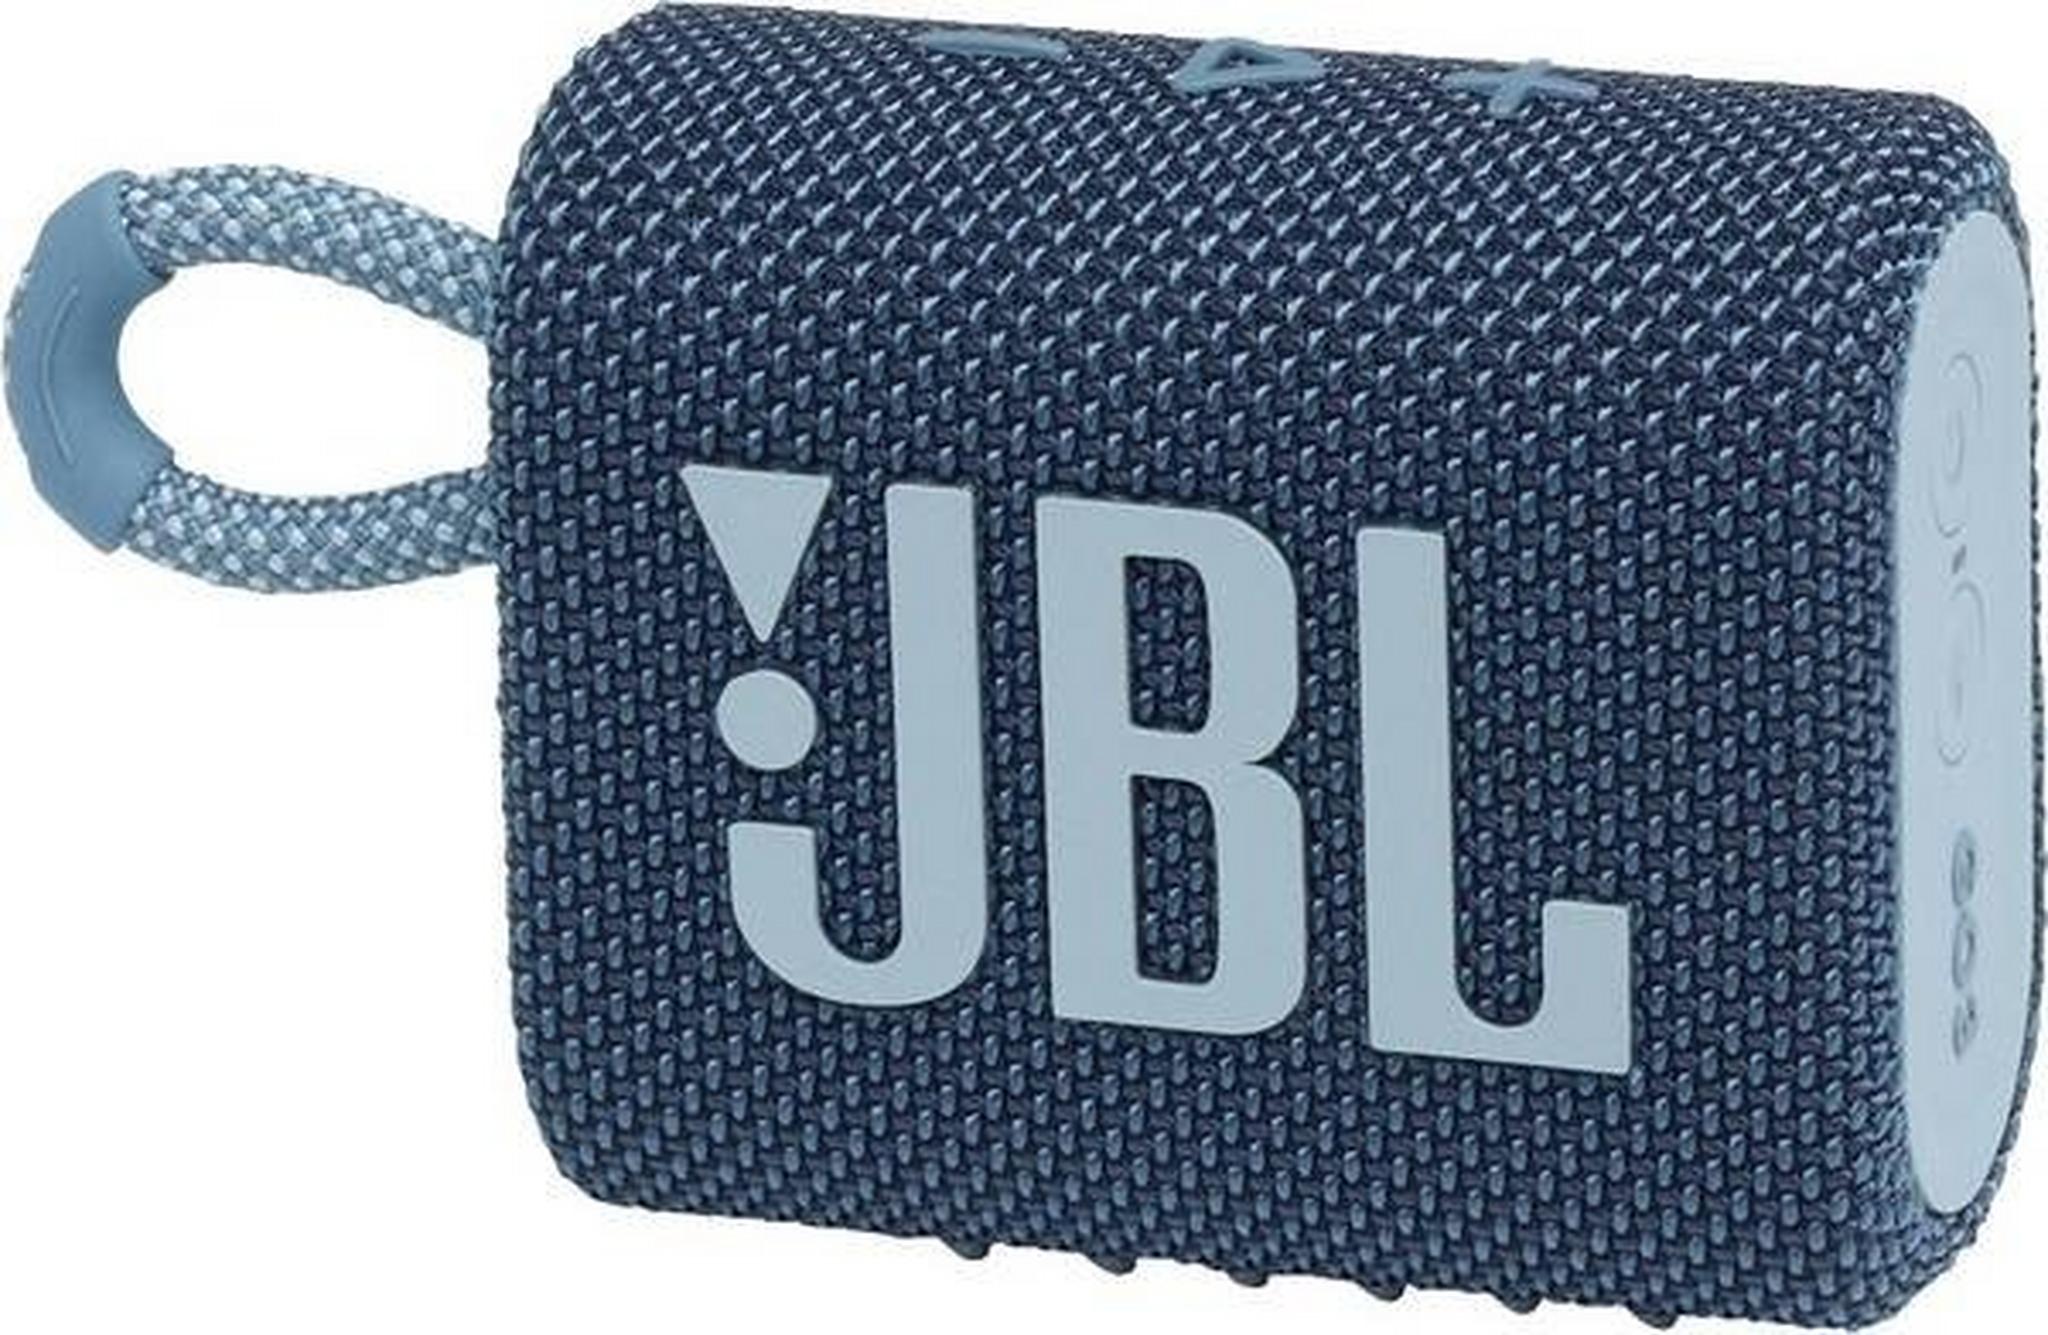 JBL Go 3 Portable Bluetooth speaker Water-proof, Dust-proof - Blue